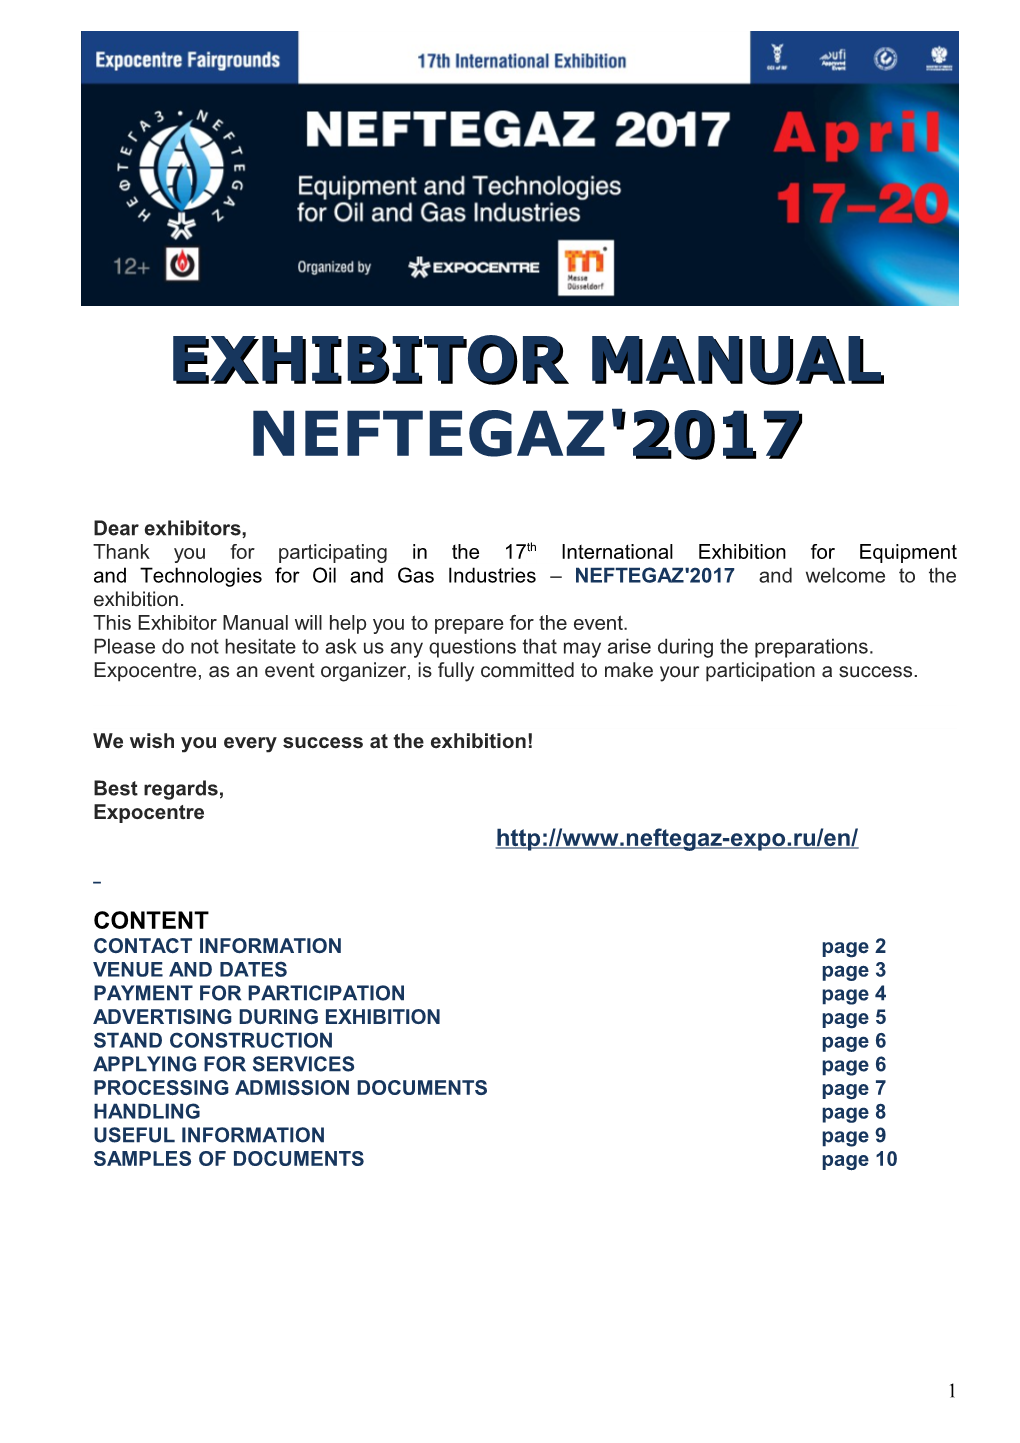 Exhibitor Manual s1